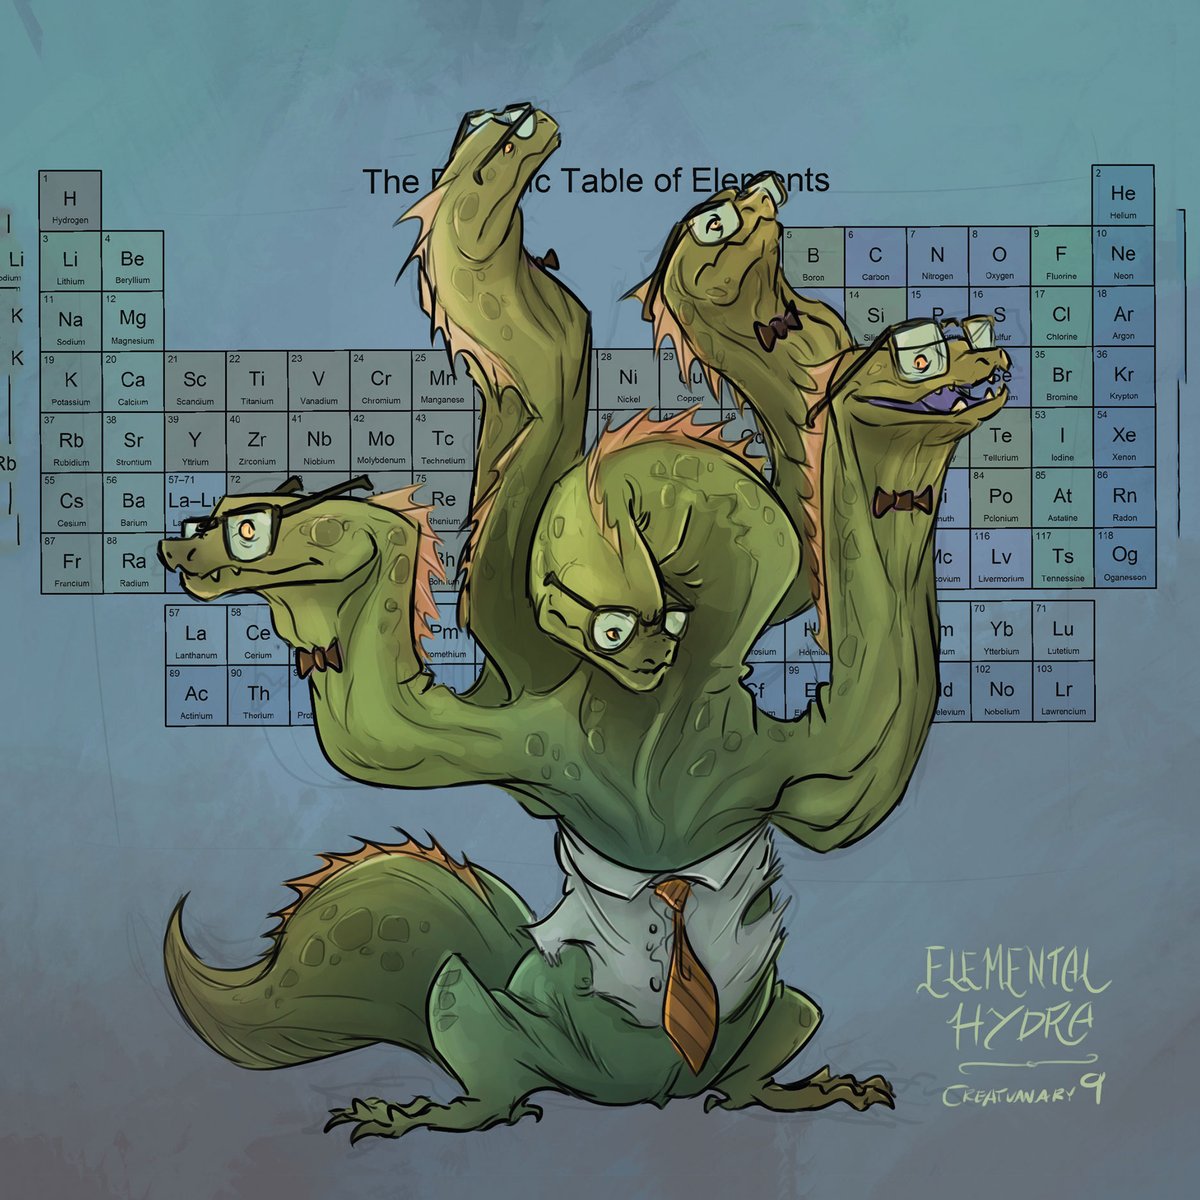 Elemental Hydra... get it?

#monster #creatunary #weretober #hydra #elemental #nerd #funny #scalie #snake #eel